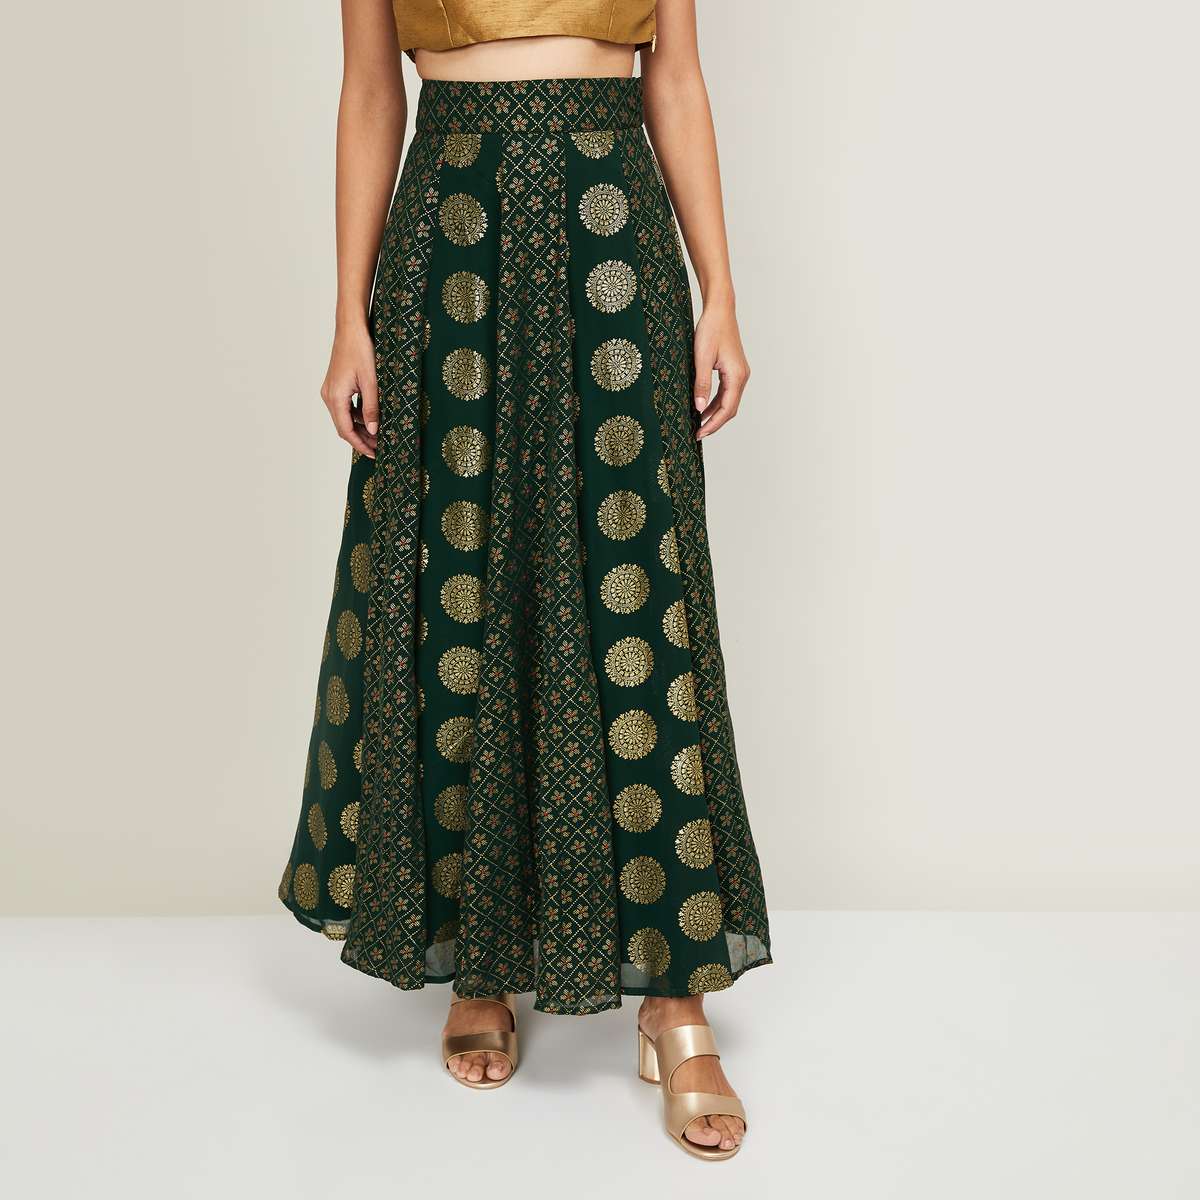 1.INDYA Women Printed A-line Ethnic Skirt